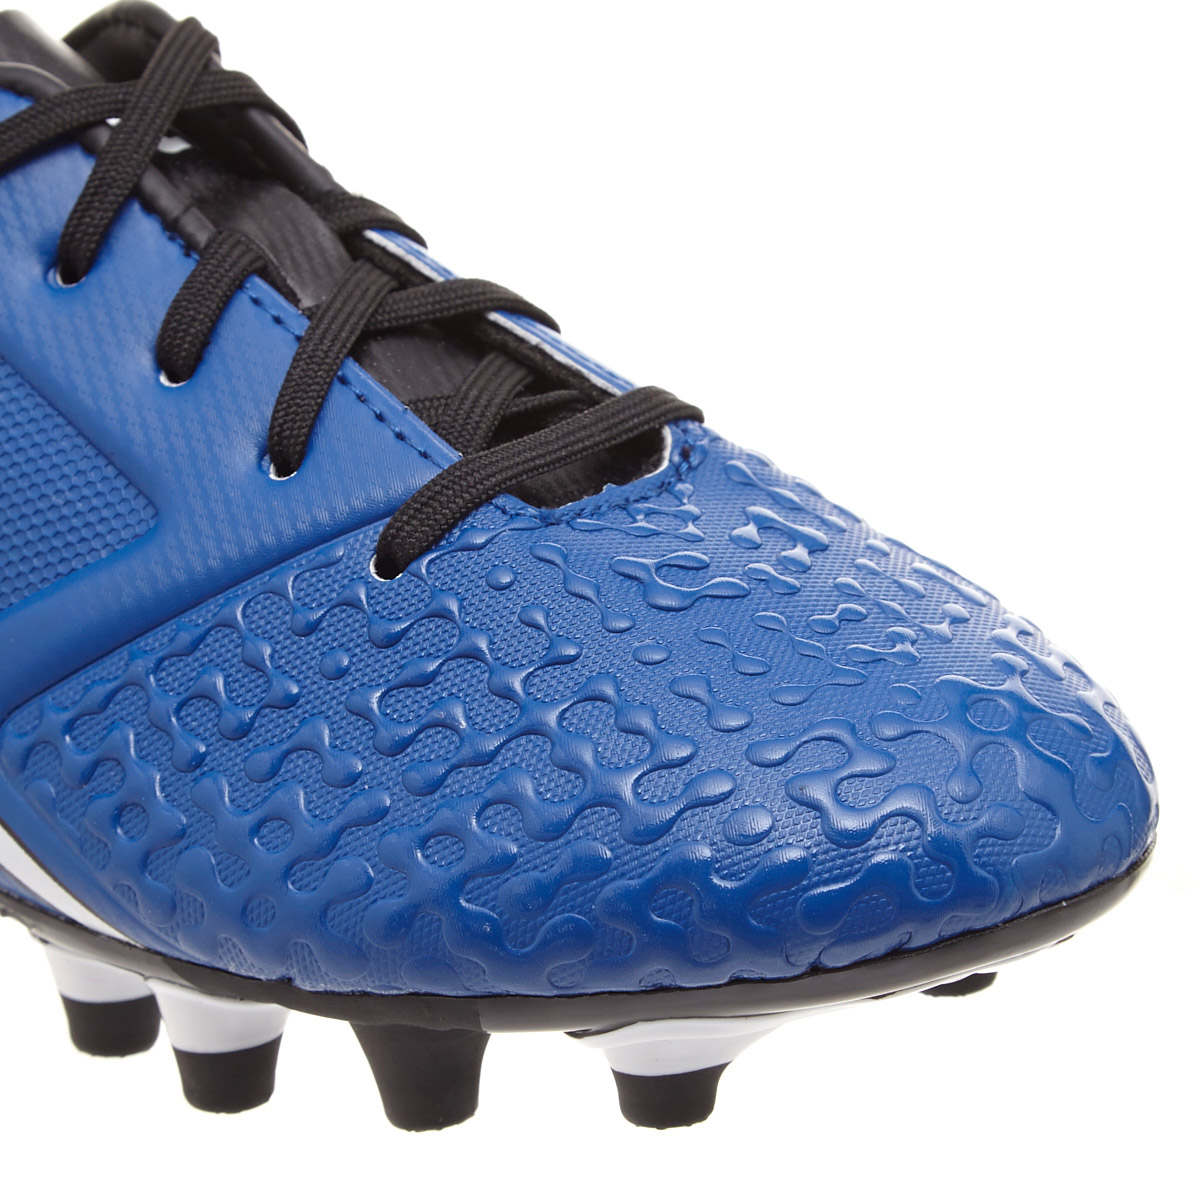 Blue Boys Mitre Football Boots